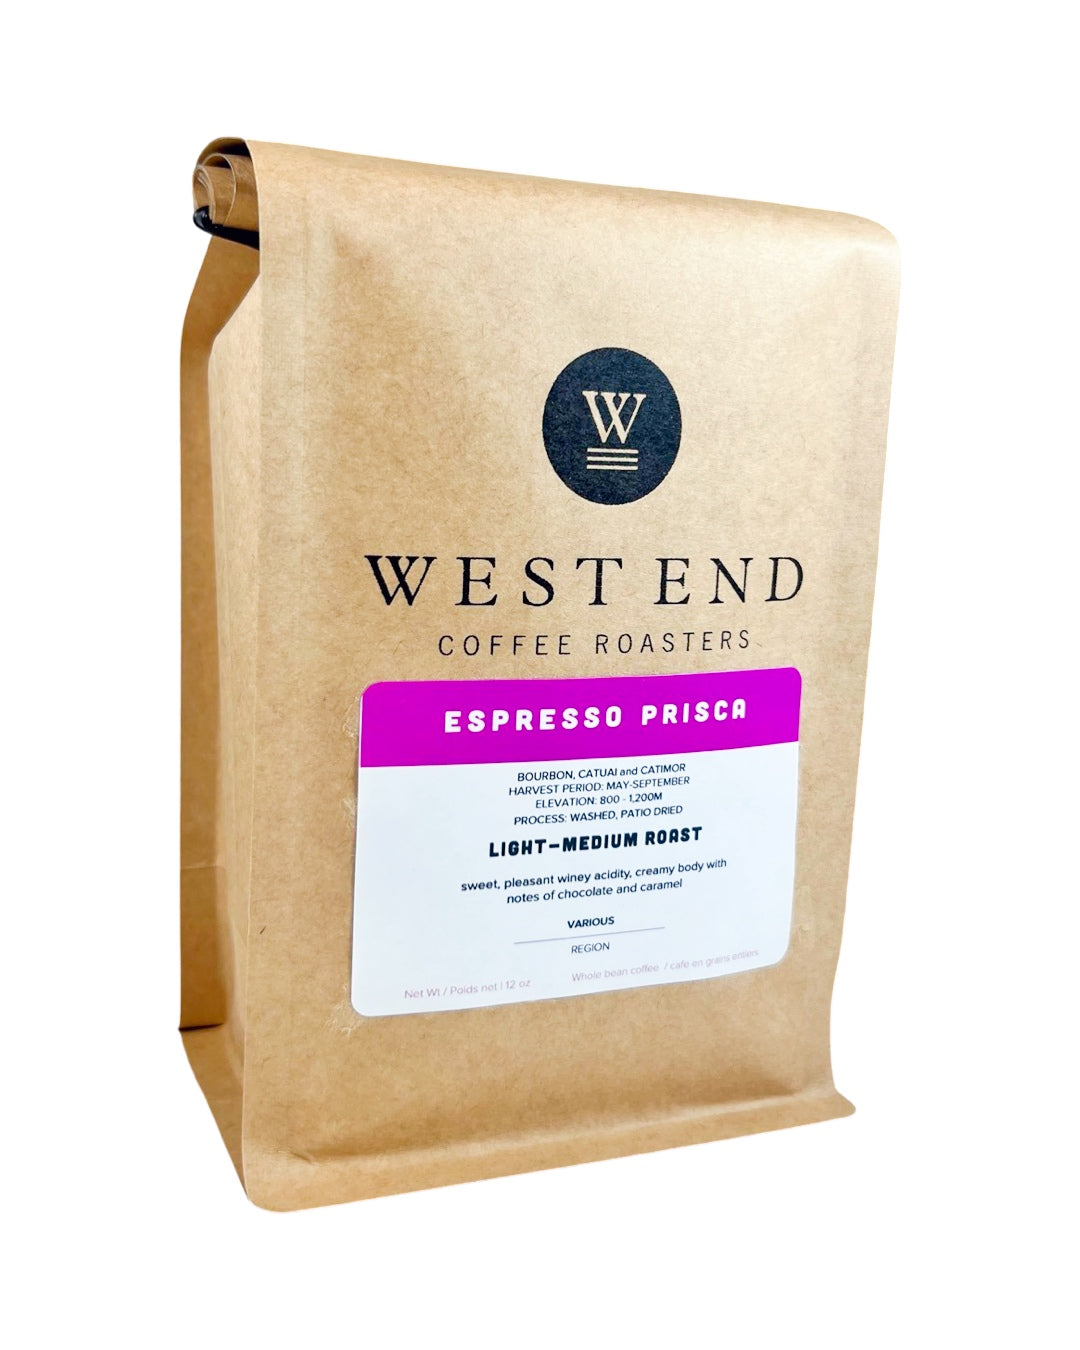 Espresso Prisca - medium roast - West End Coffee Roasters